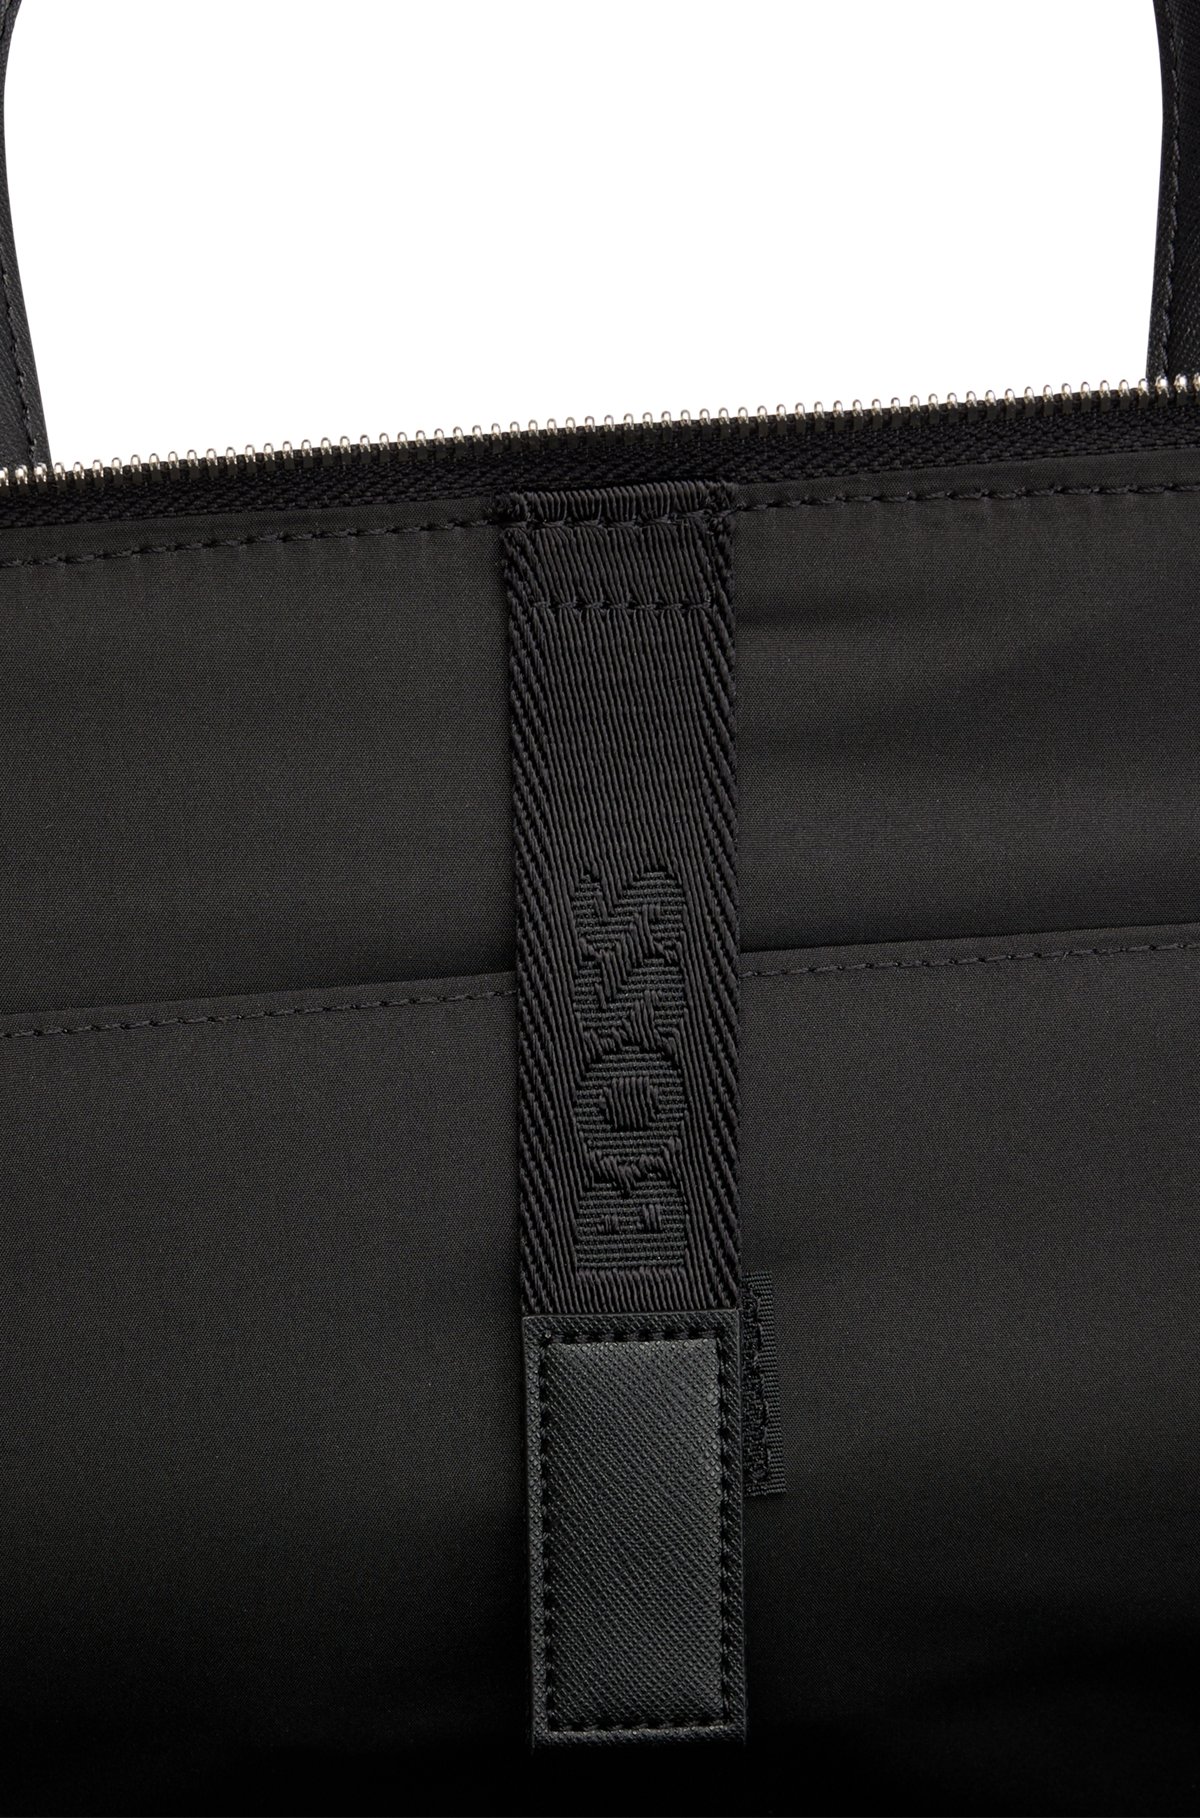 Slimline document case with detachable branded strap, Black